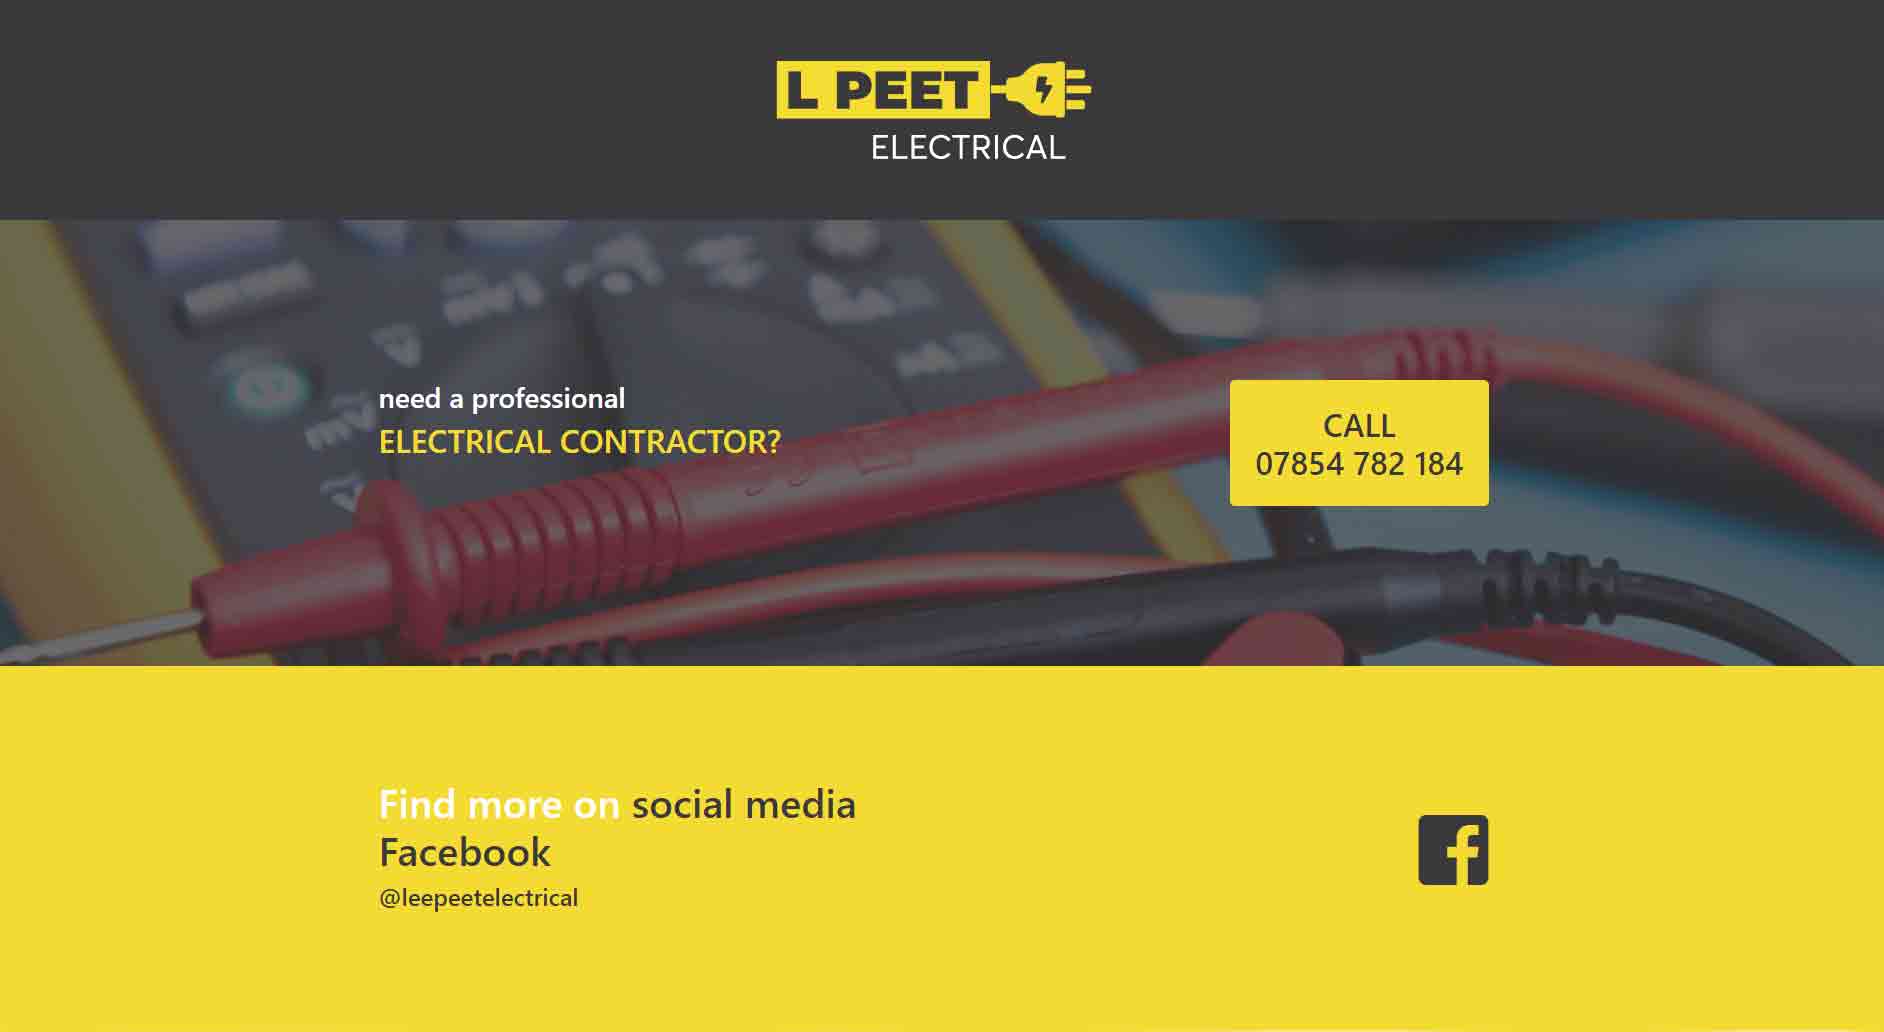 L Peet Electrical - by Cecil Web Designs